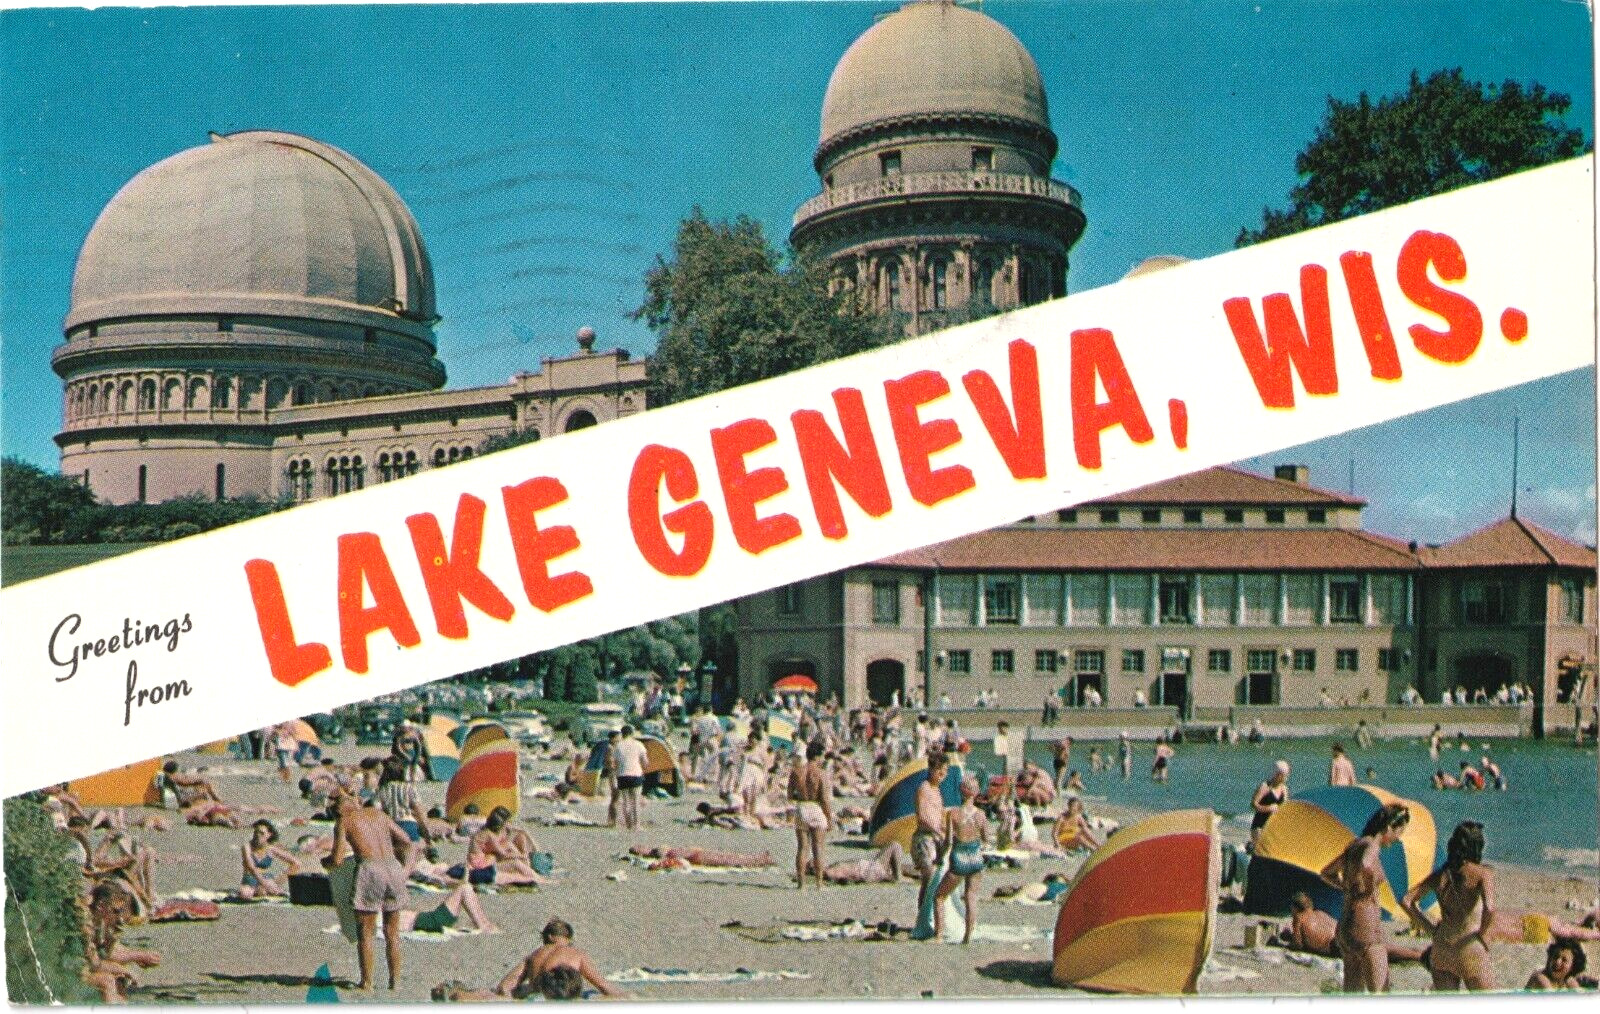 Greetings from Lake Geneva, WI. Yerkes Observatory, Williams Bay-Postcard 1960s